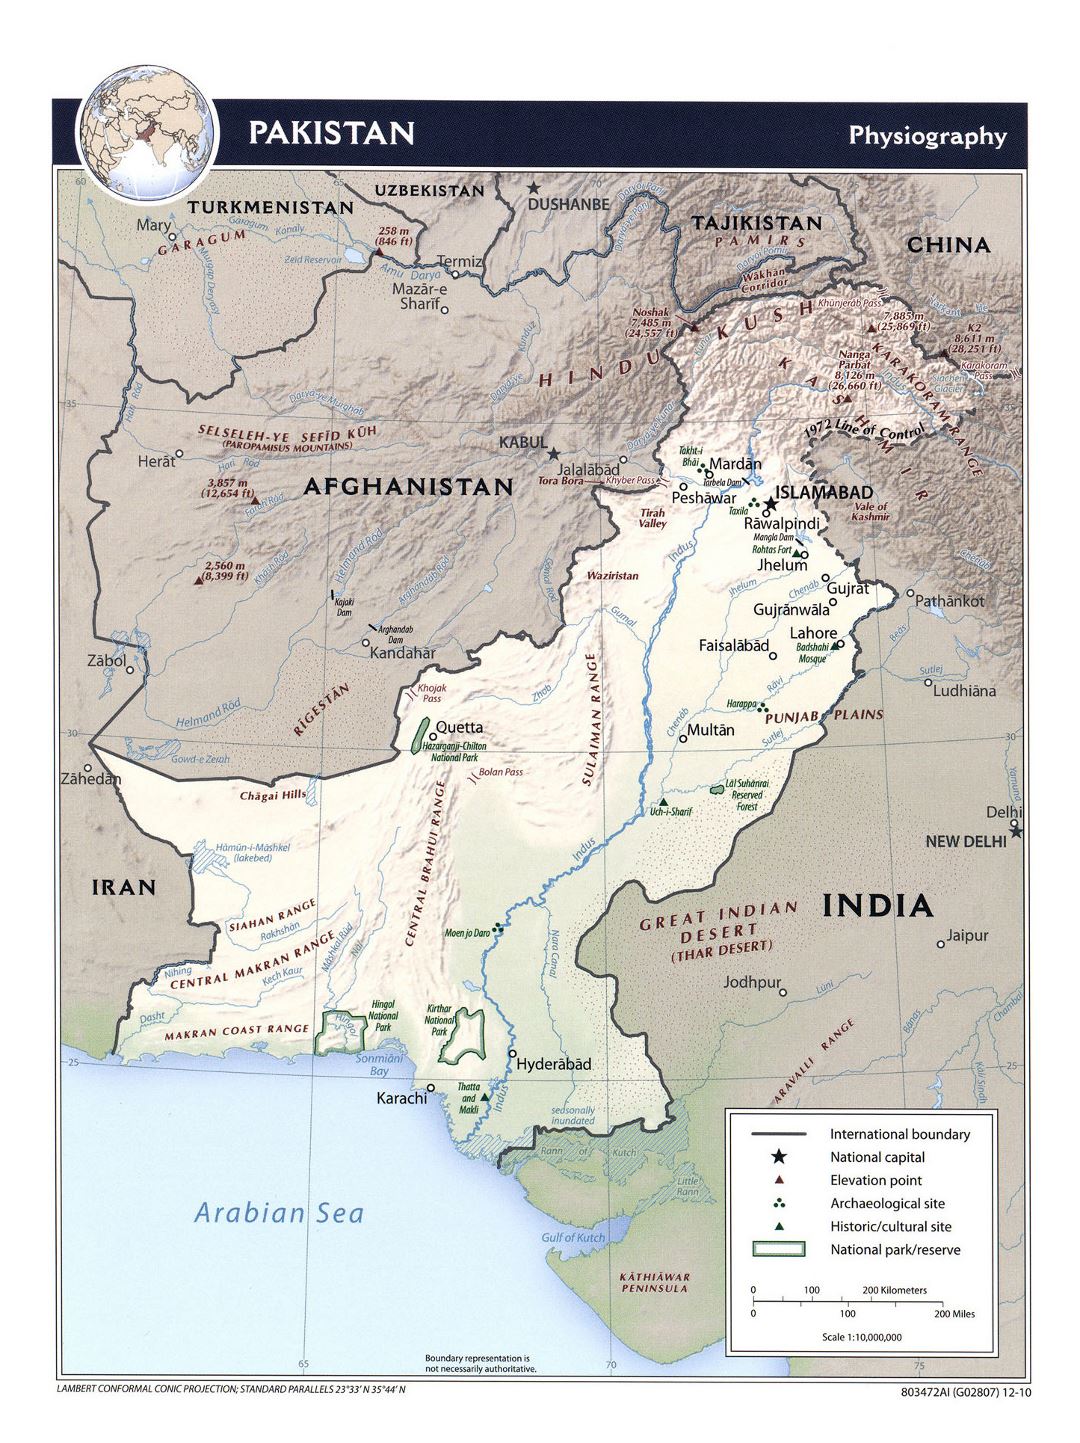 Detallado mapa de fisiografía de Pakistán - 2010